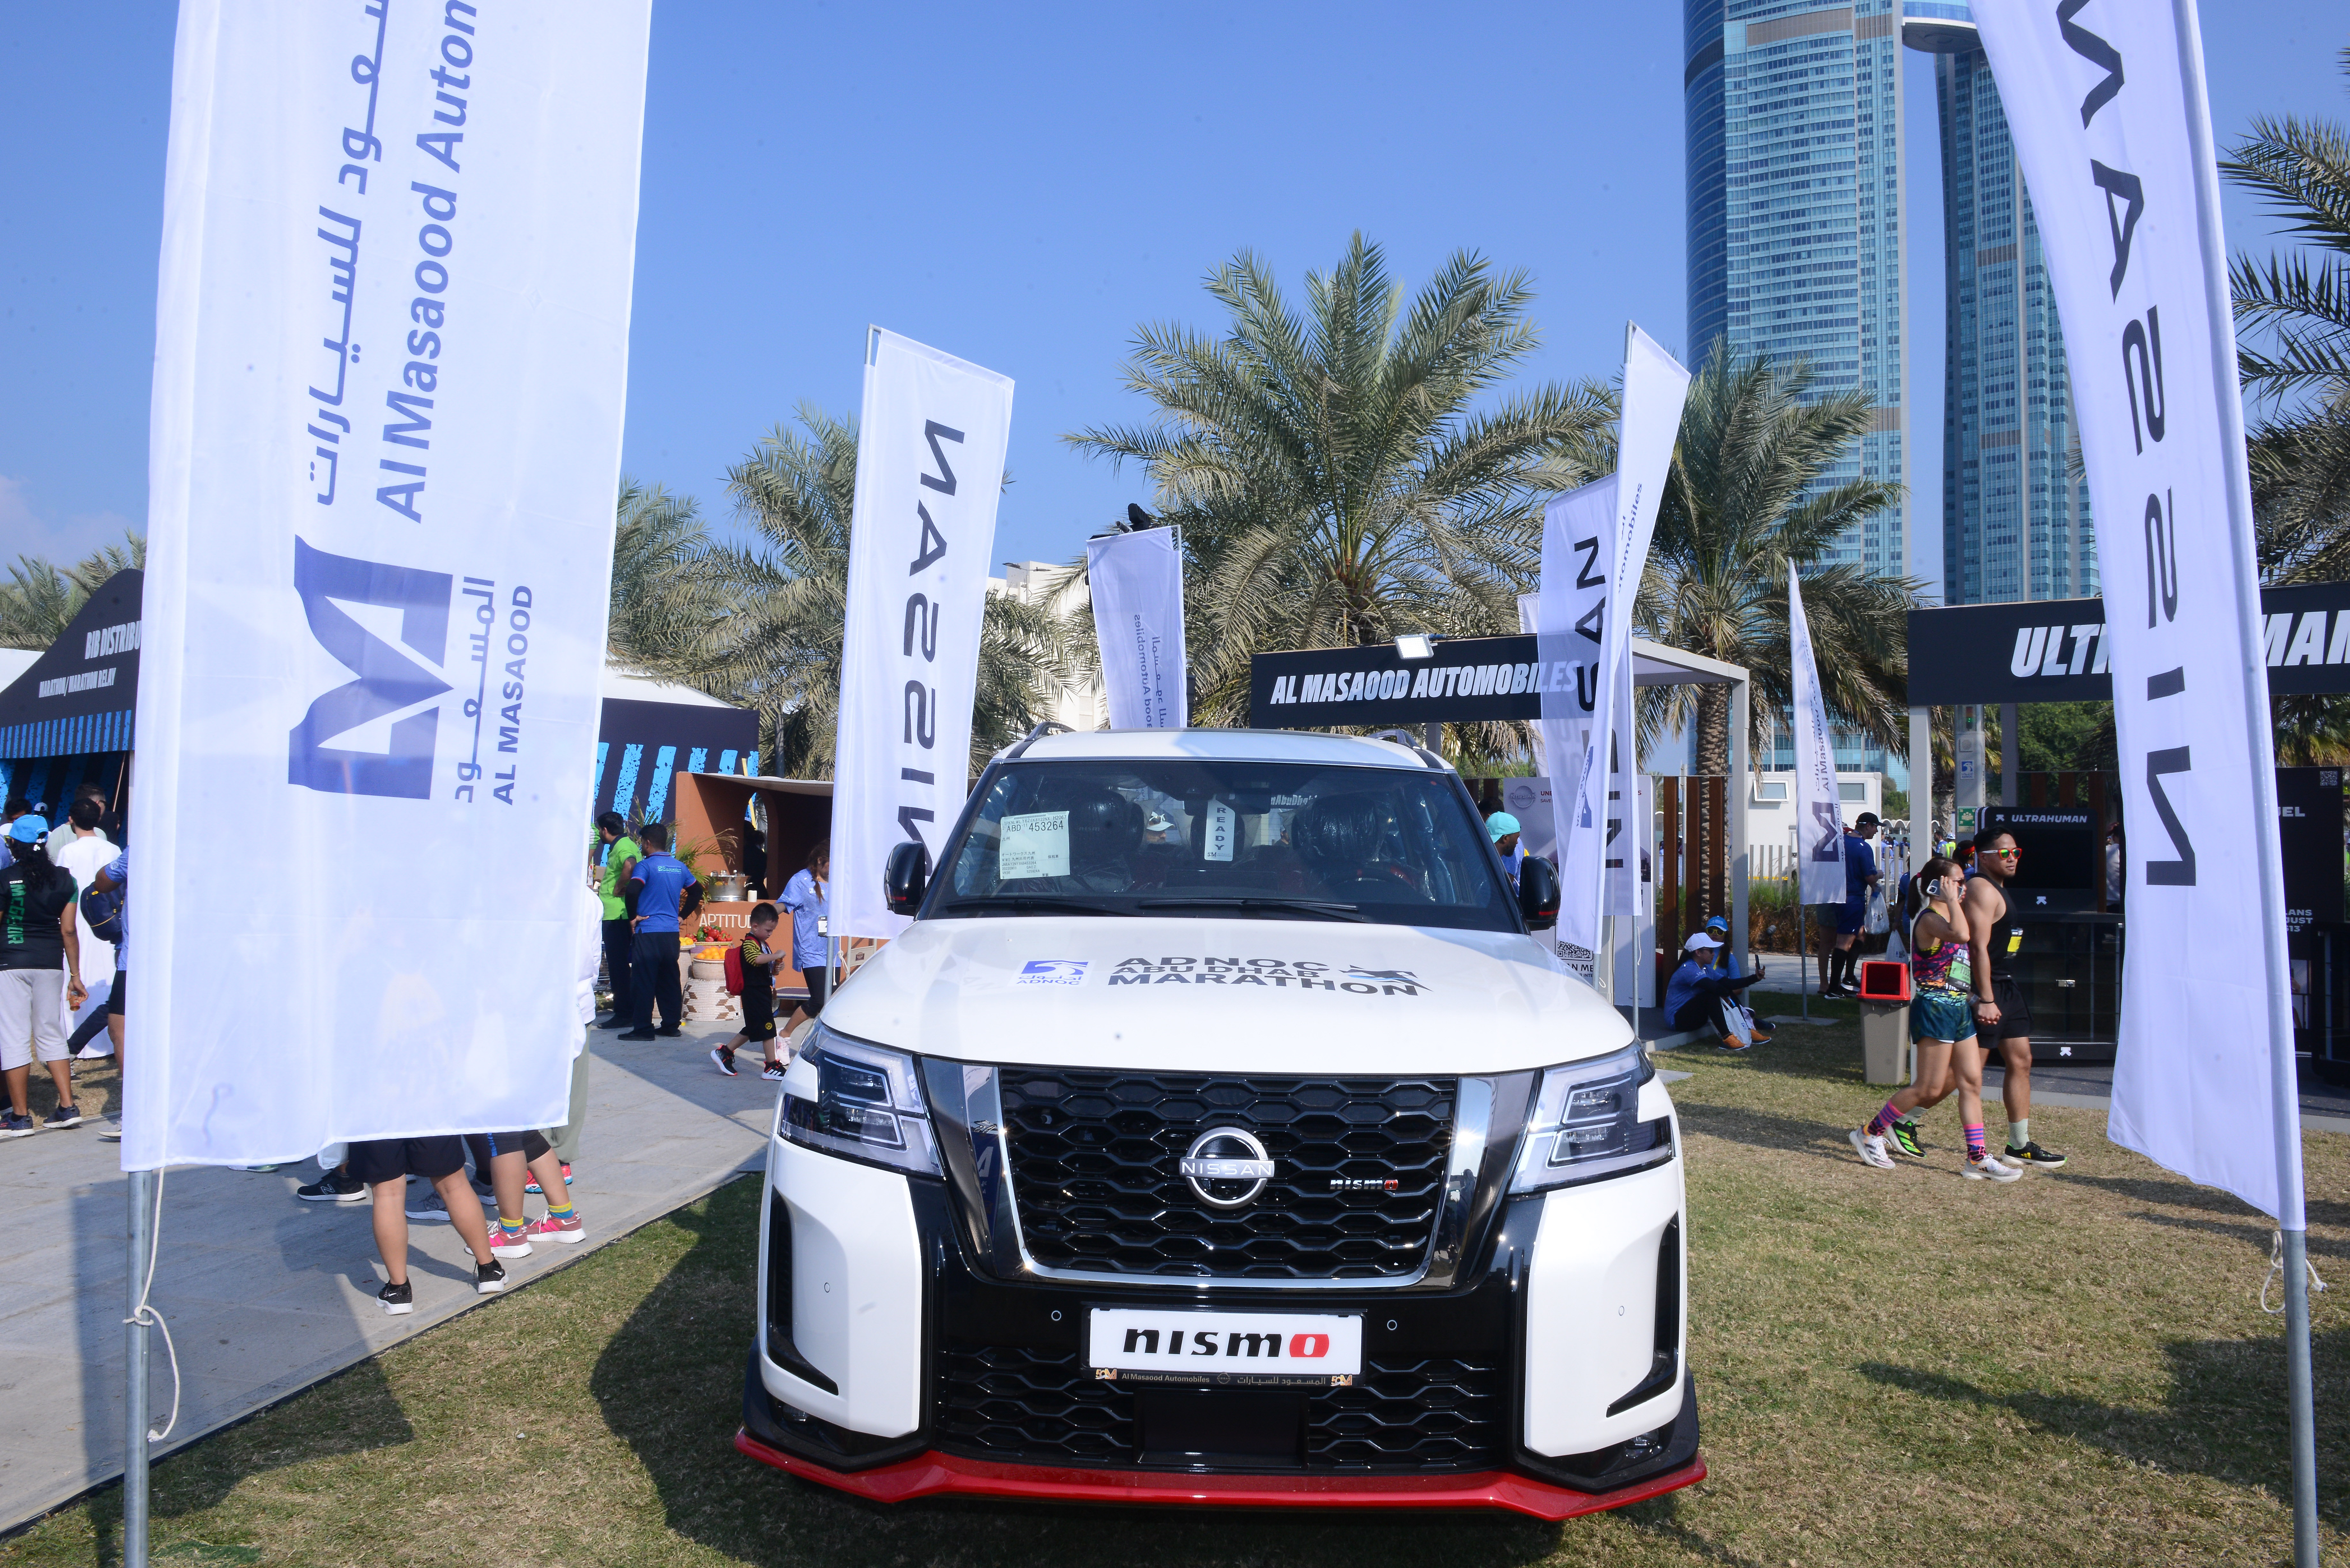 Al Masaood Automobiles – Nissan Continues to Empower Community through Sport – Sponsors 5th ADNOC Abu Dhabi Marathon